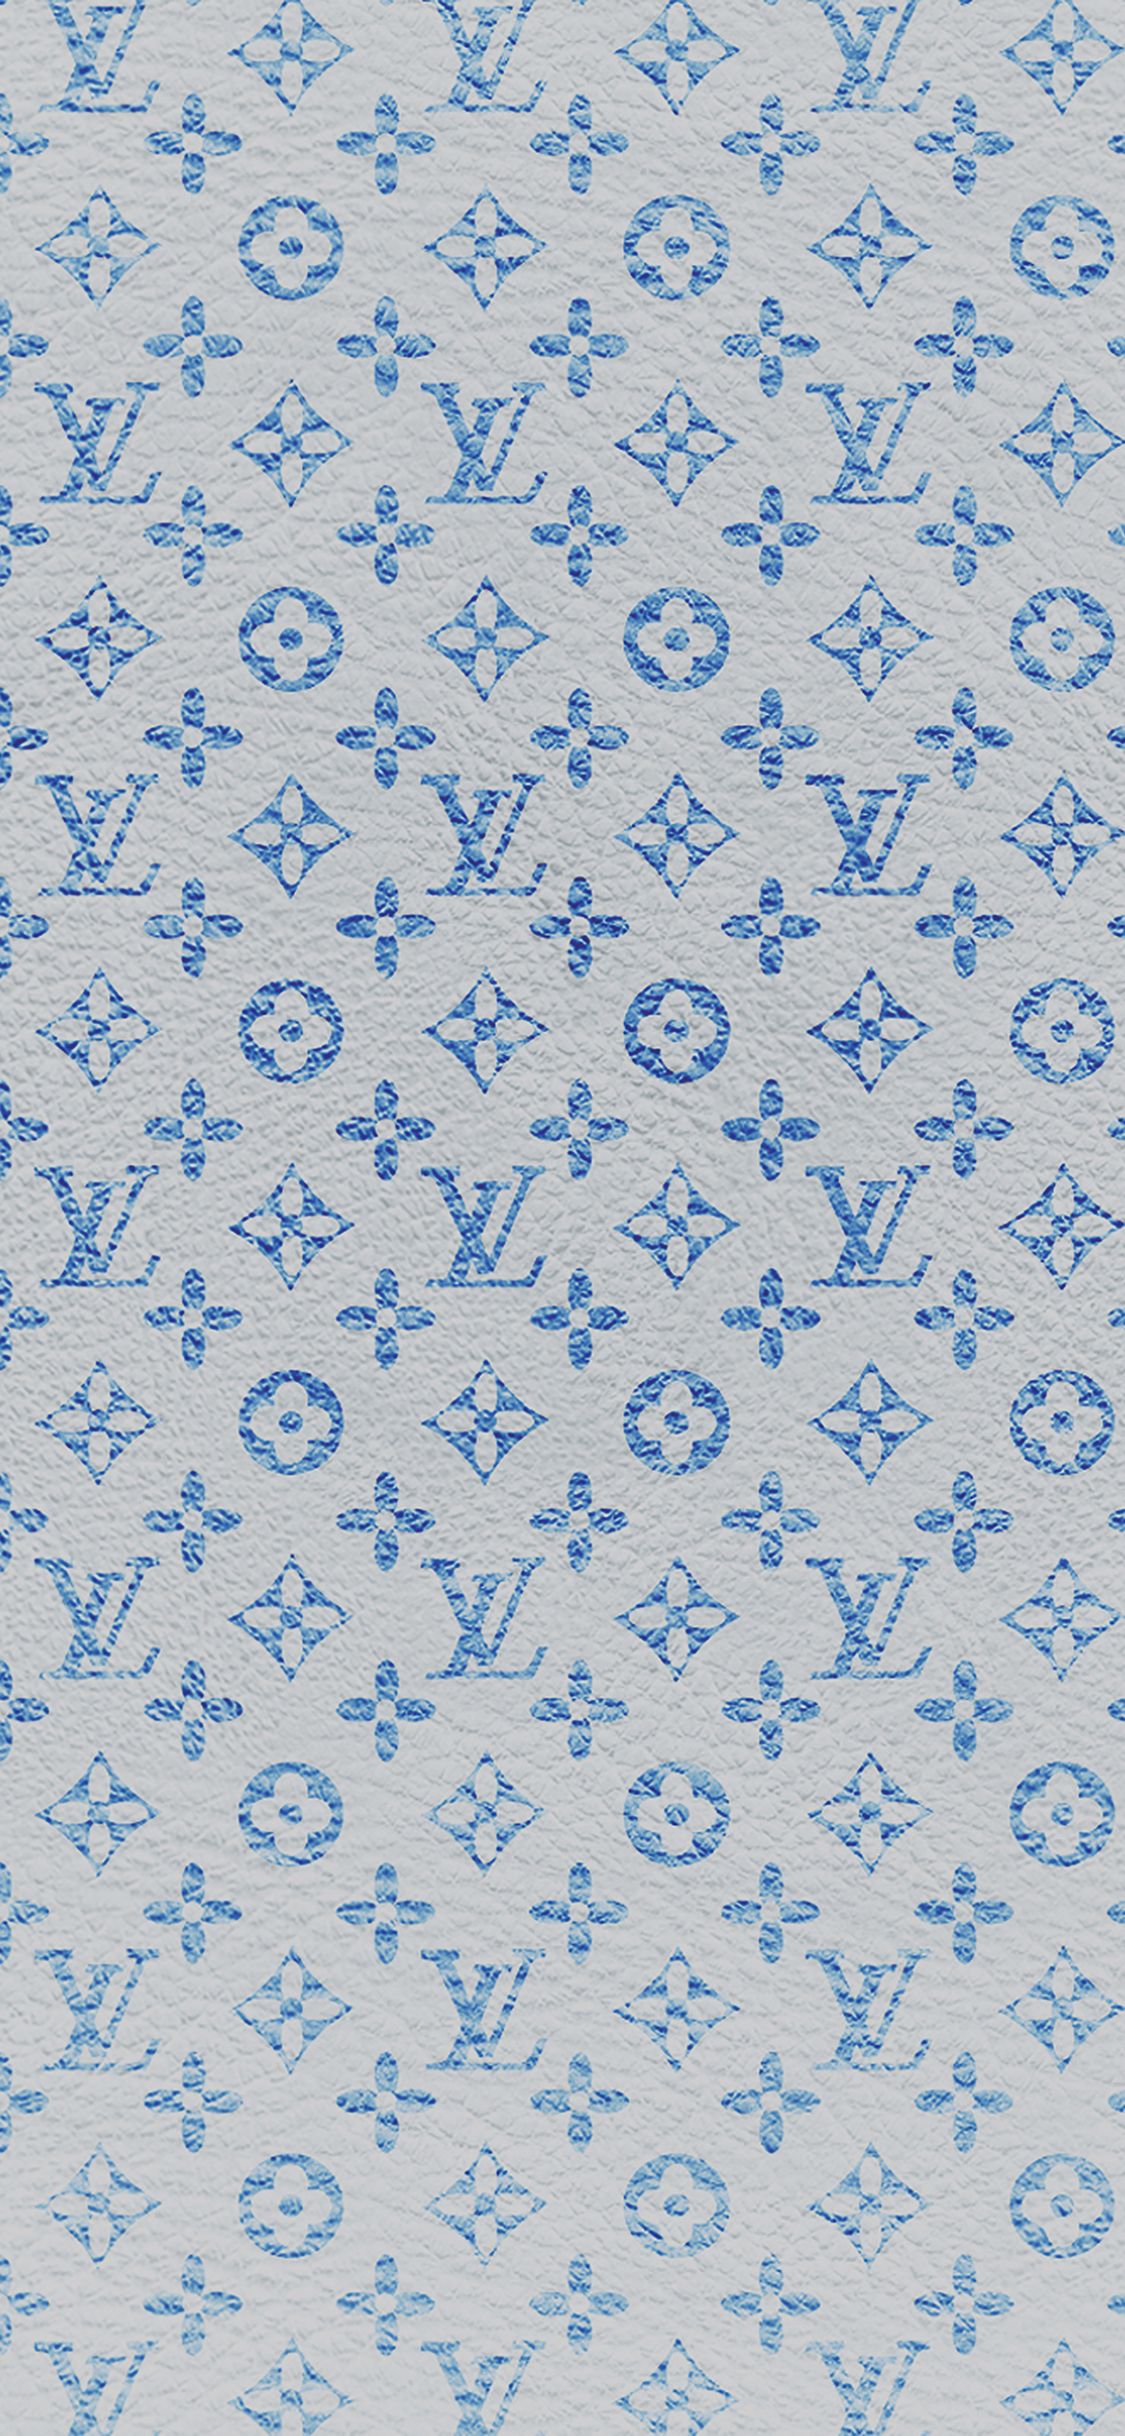 1125x2436 Louis Vuitton Blue Pattern Art Iphone X Wallpaper Free Download